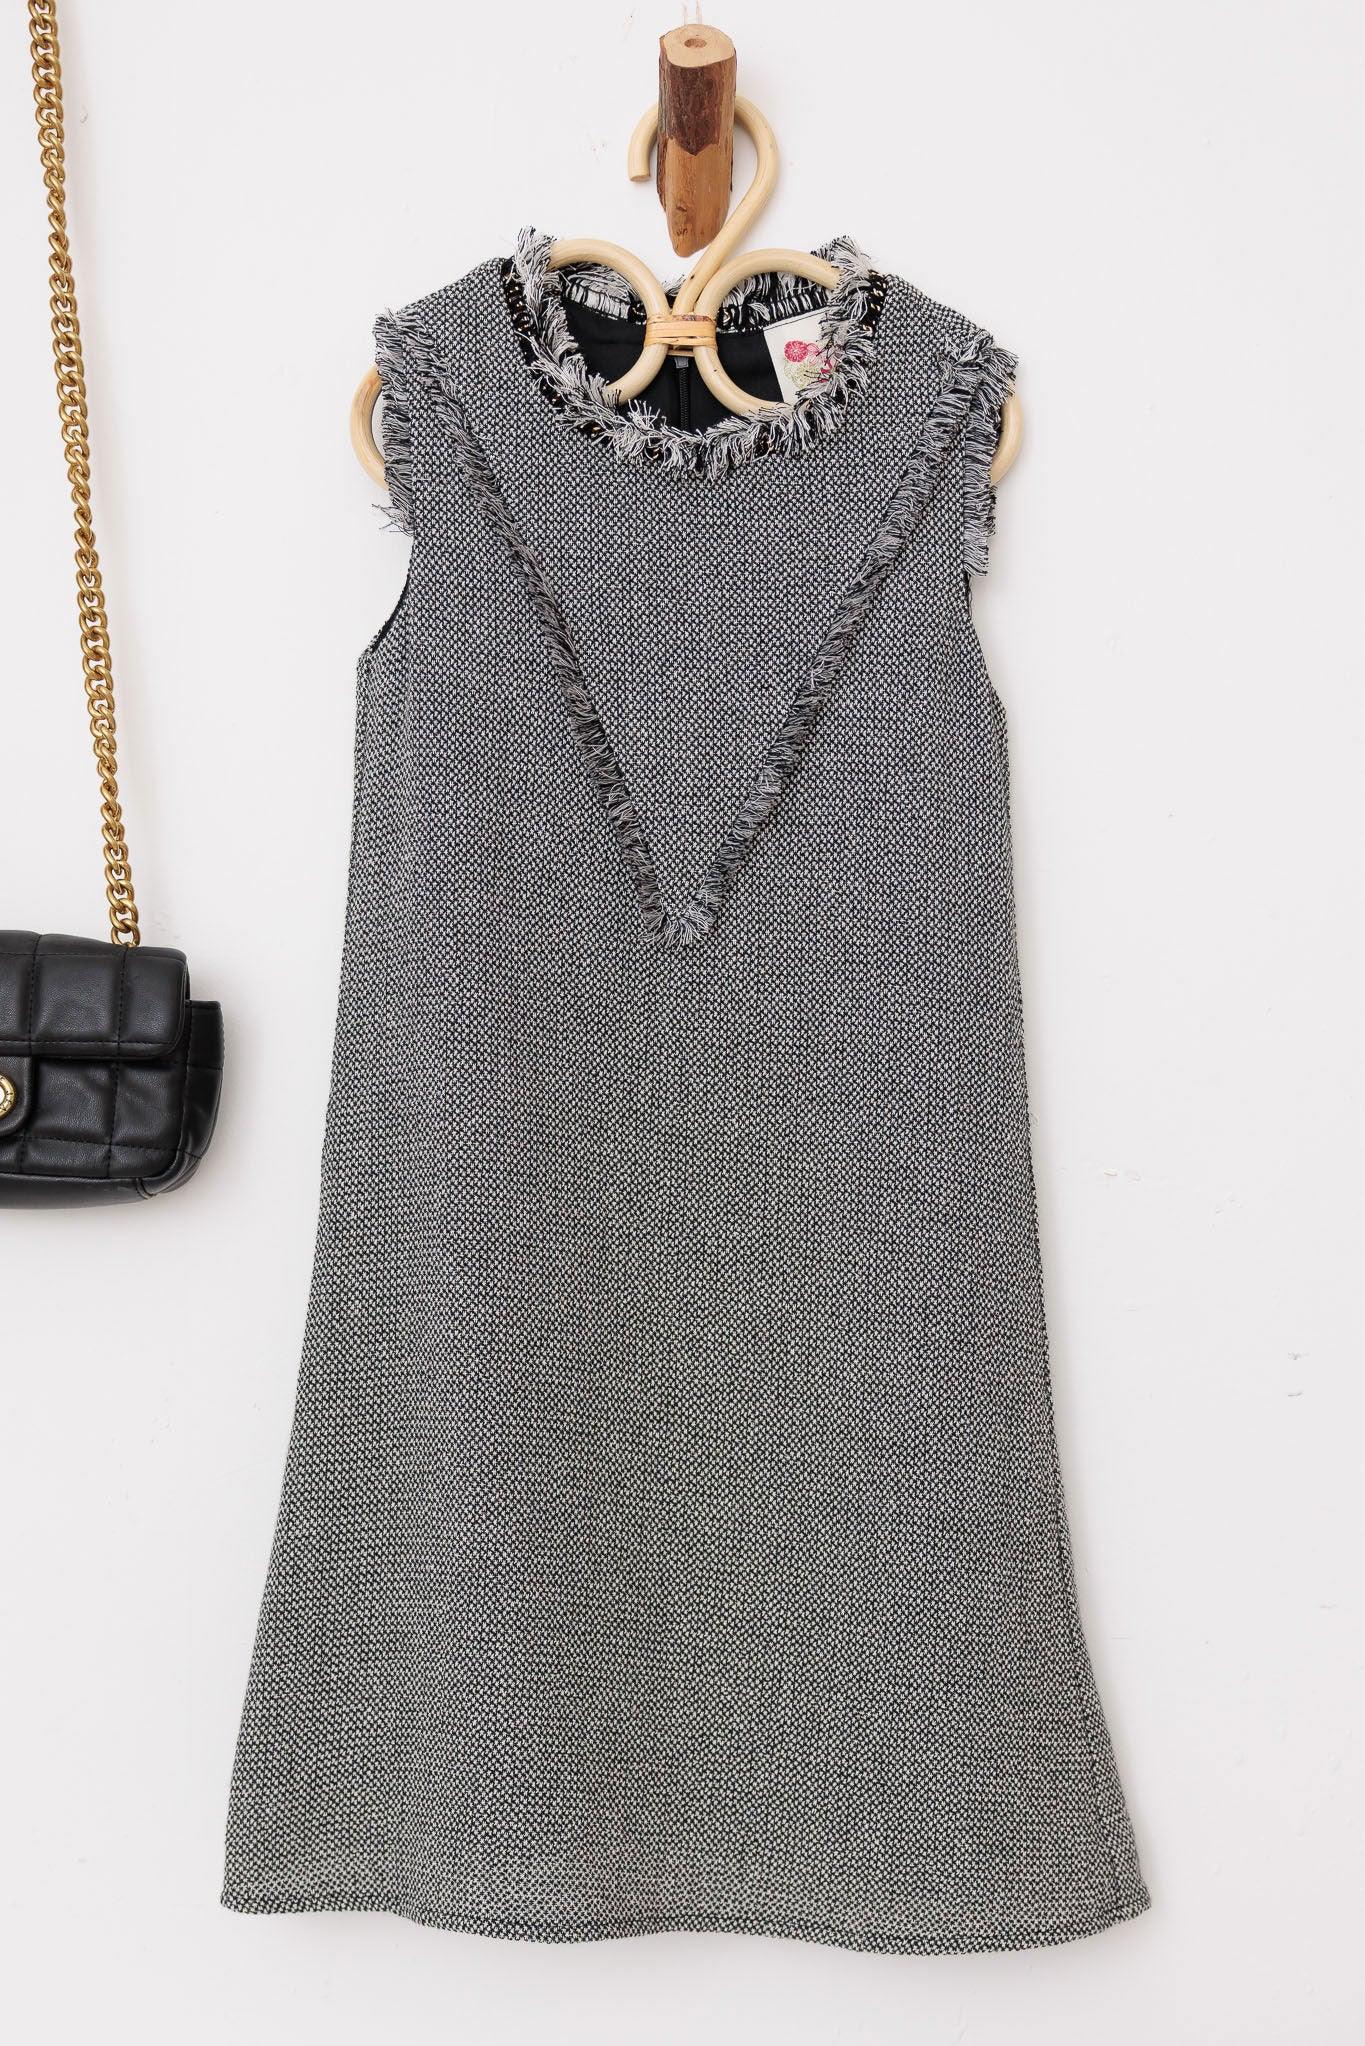 Girls Sleeveless Tweed Chain Neck-Line Fringe Dresses - Tasha Apparel Wholesale